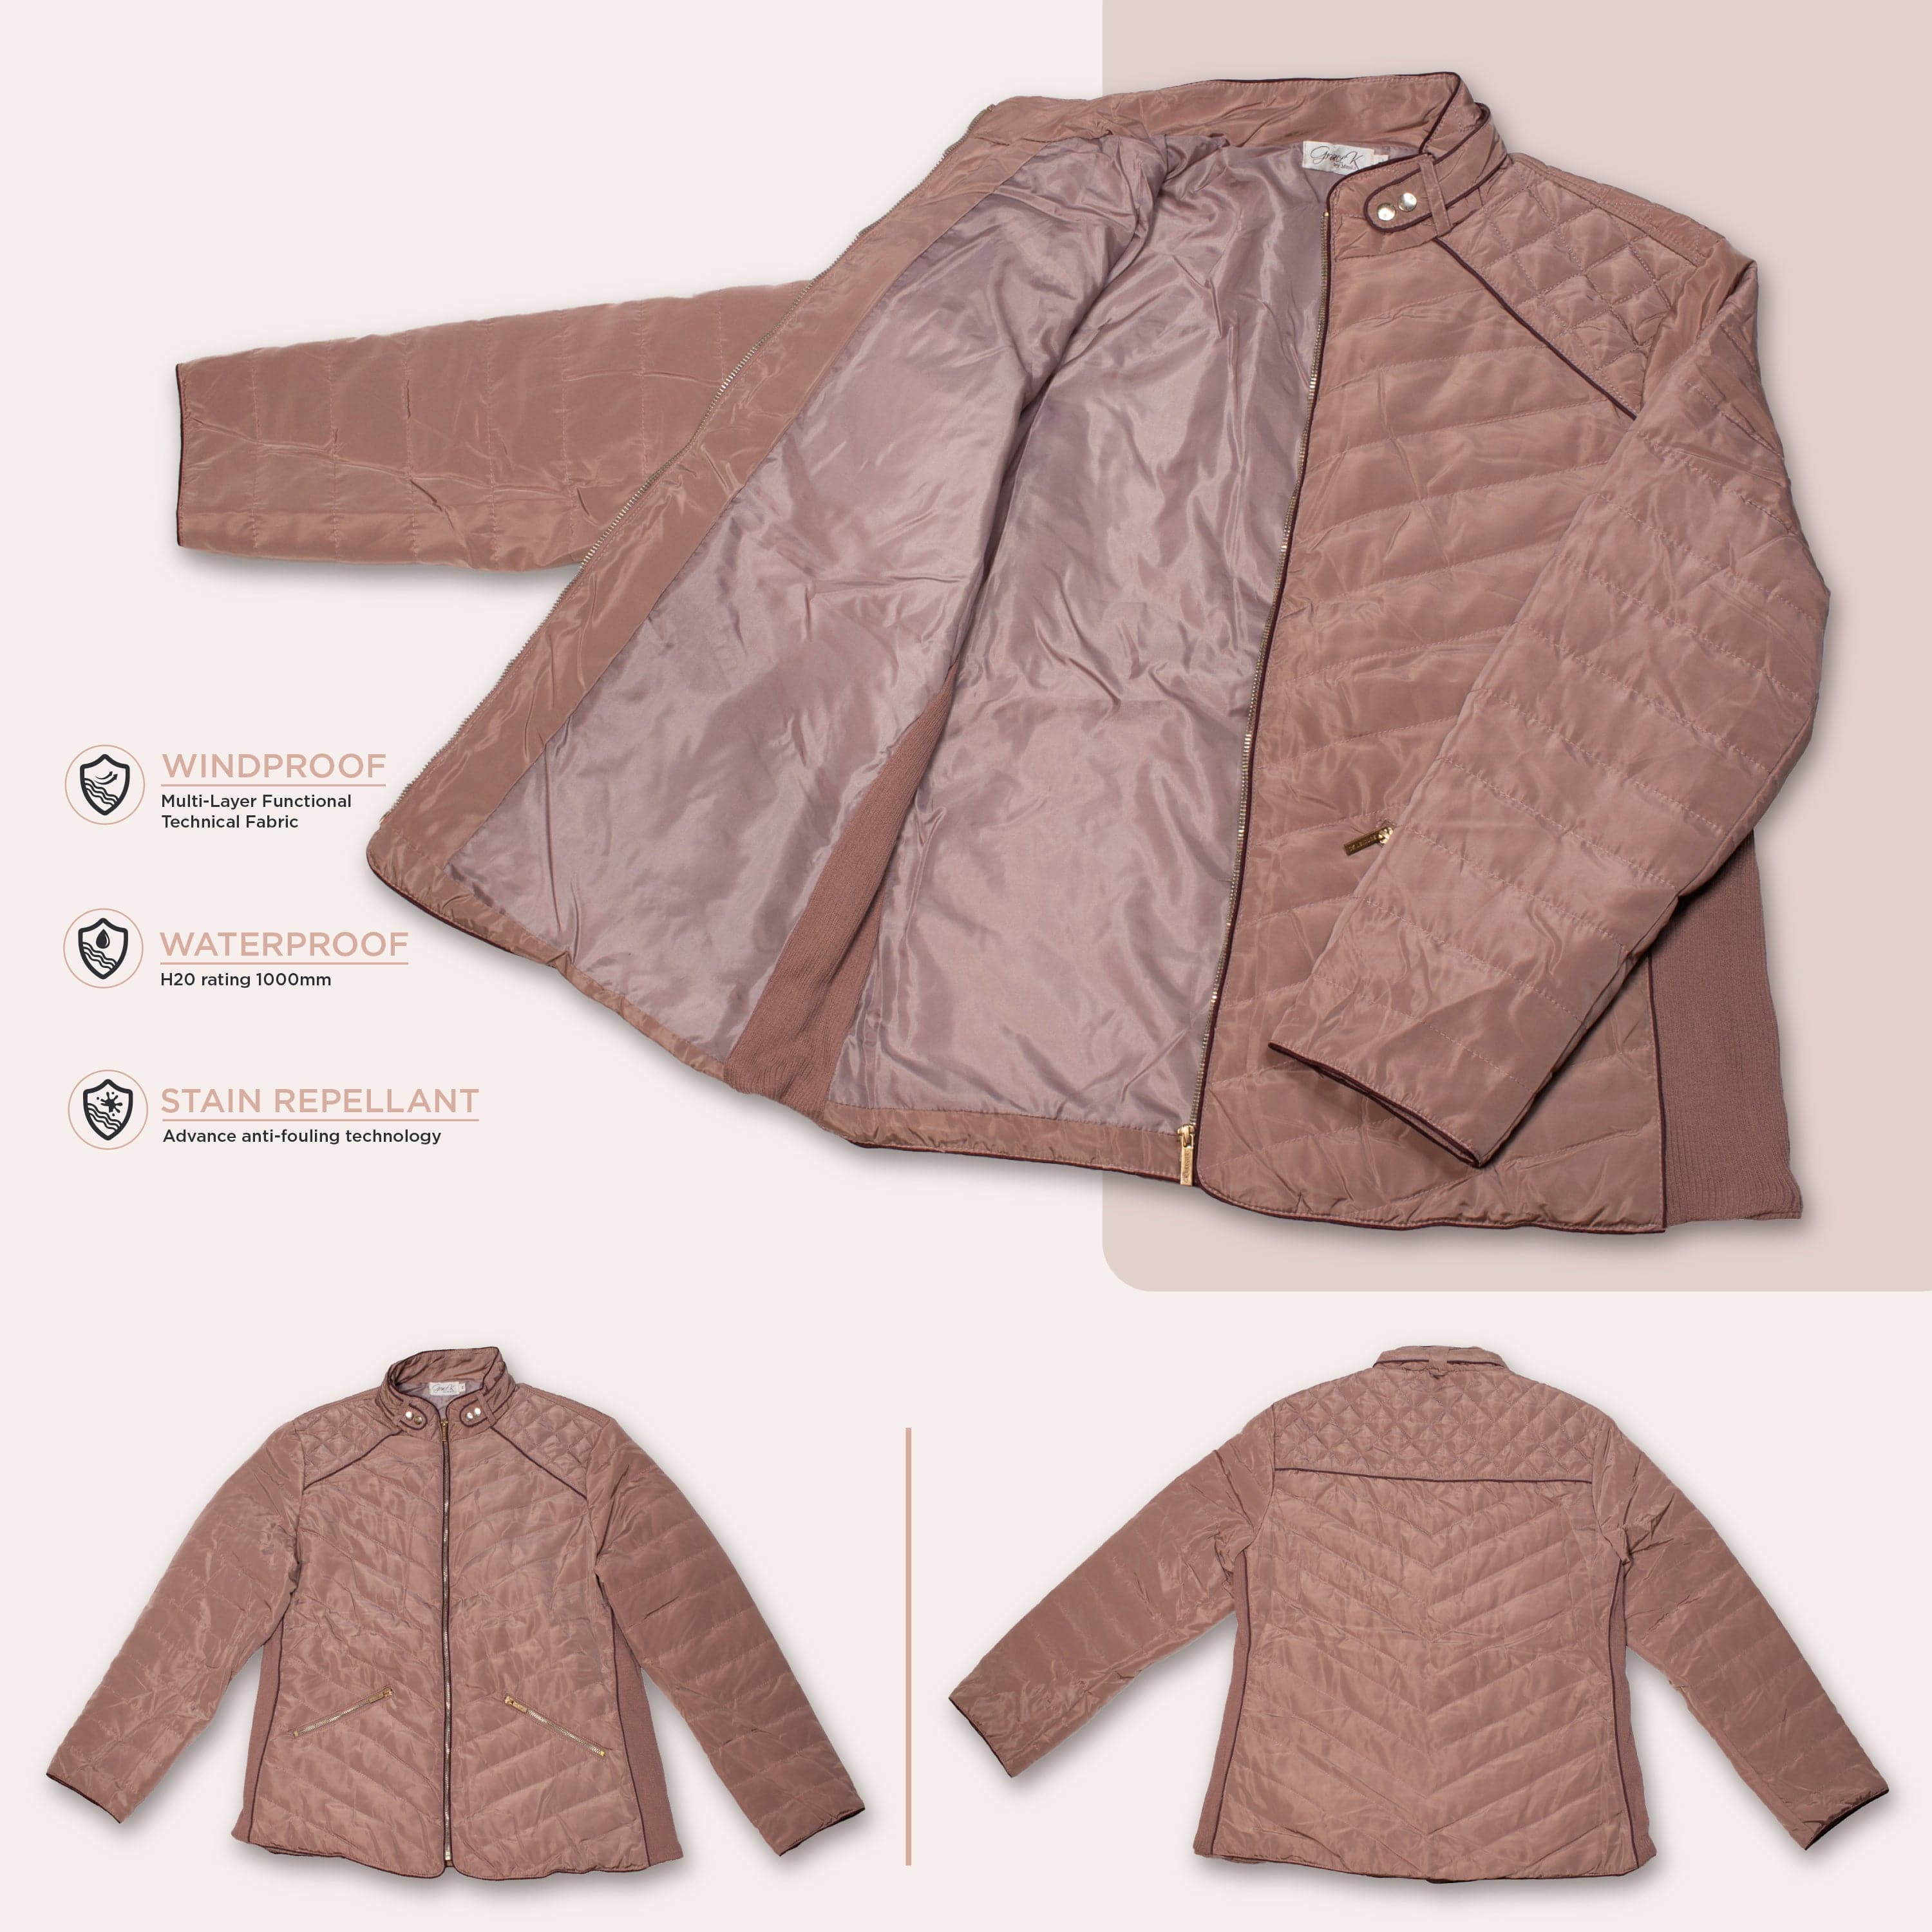 Women's Puffer Coats in Assorted Sizes - Bulk Case of 24 Jackets